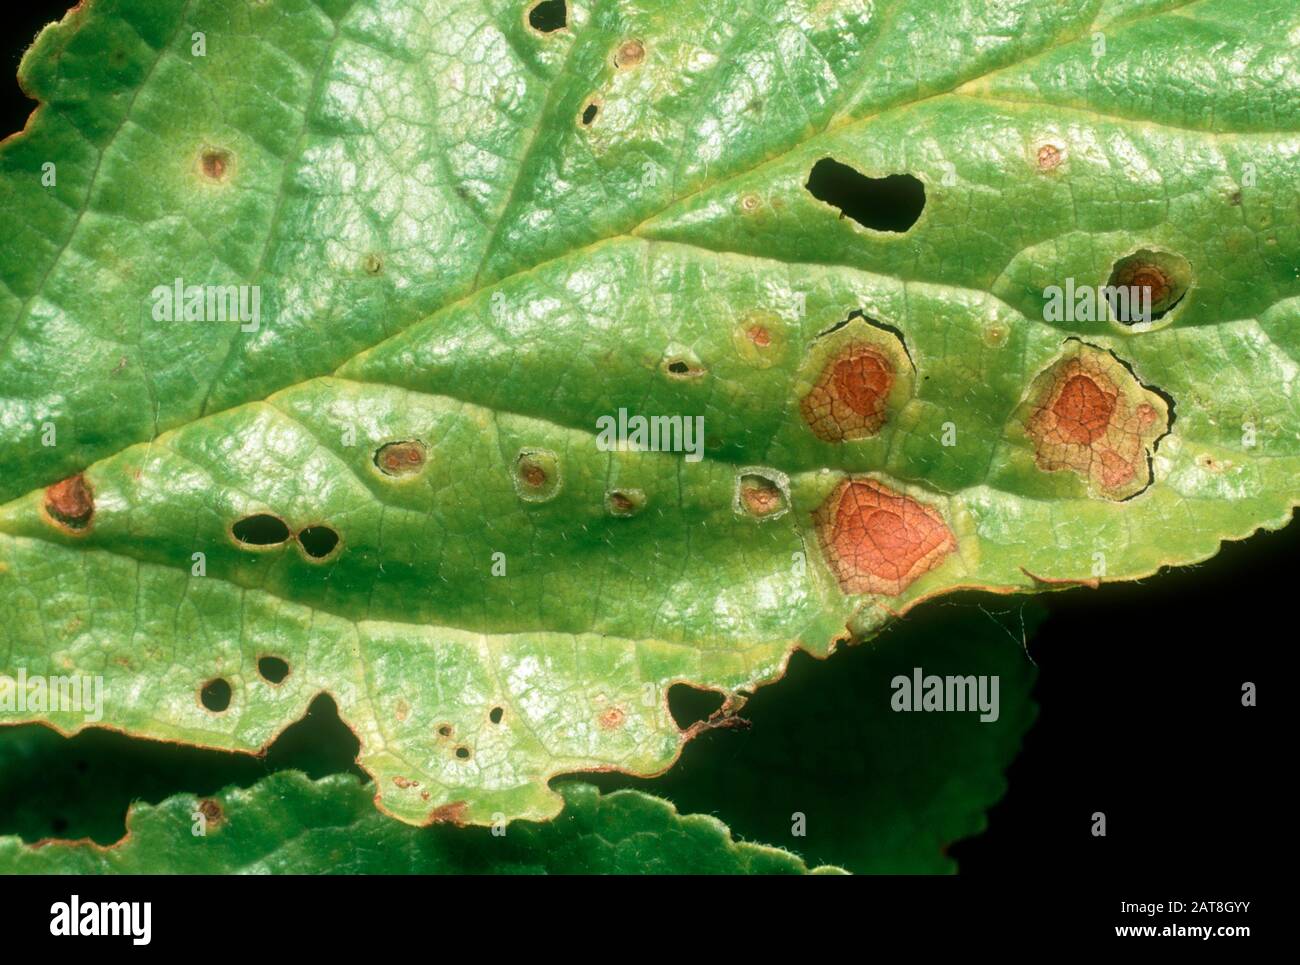 Shot hole (Pseudomonas syringae morsprunorum) a bacterial disease causing lesions and 'shot-hole' effect in a plum leaf Stock Photo